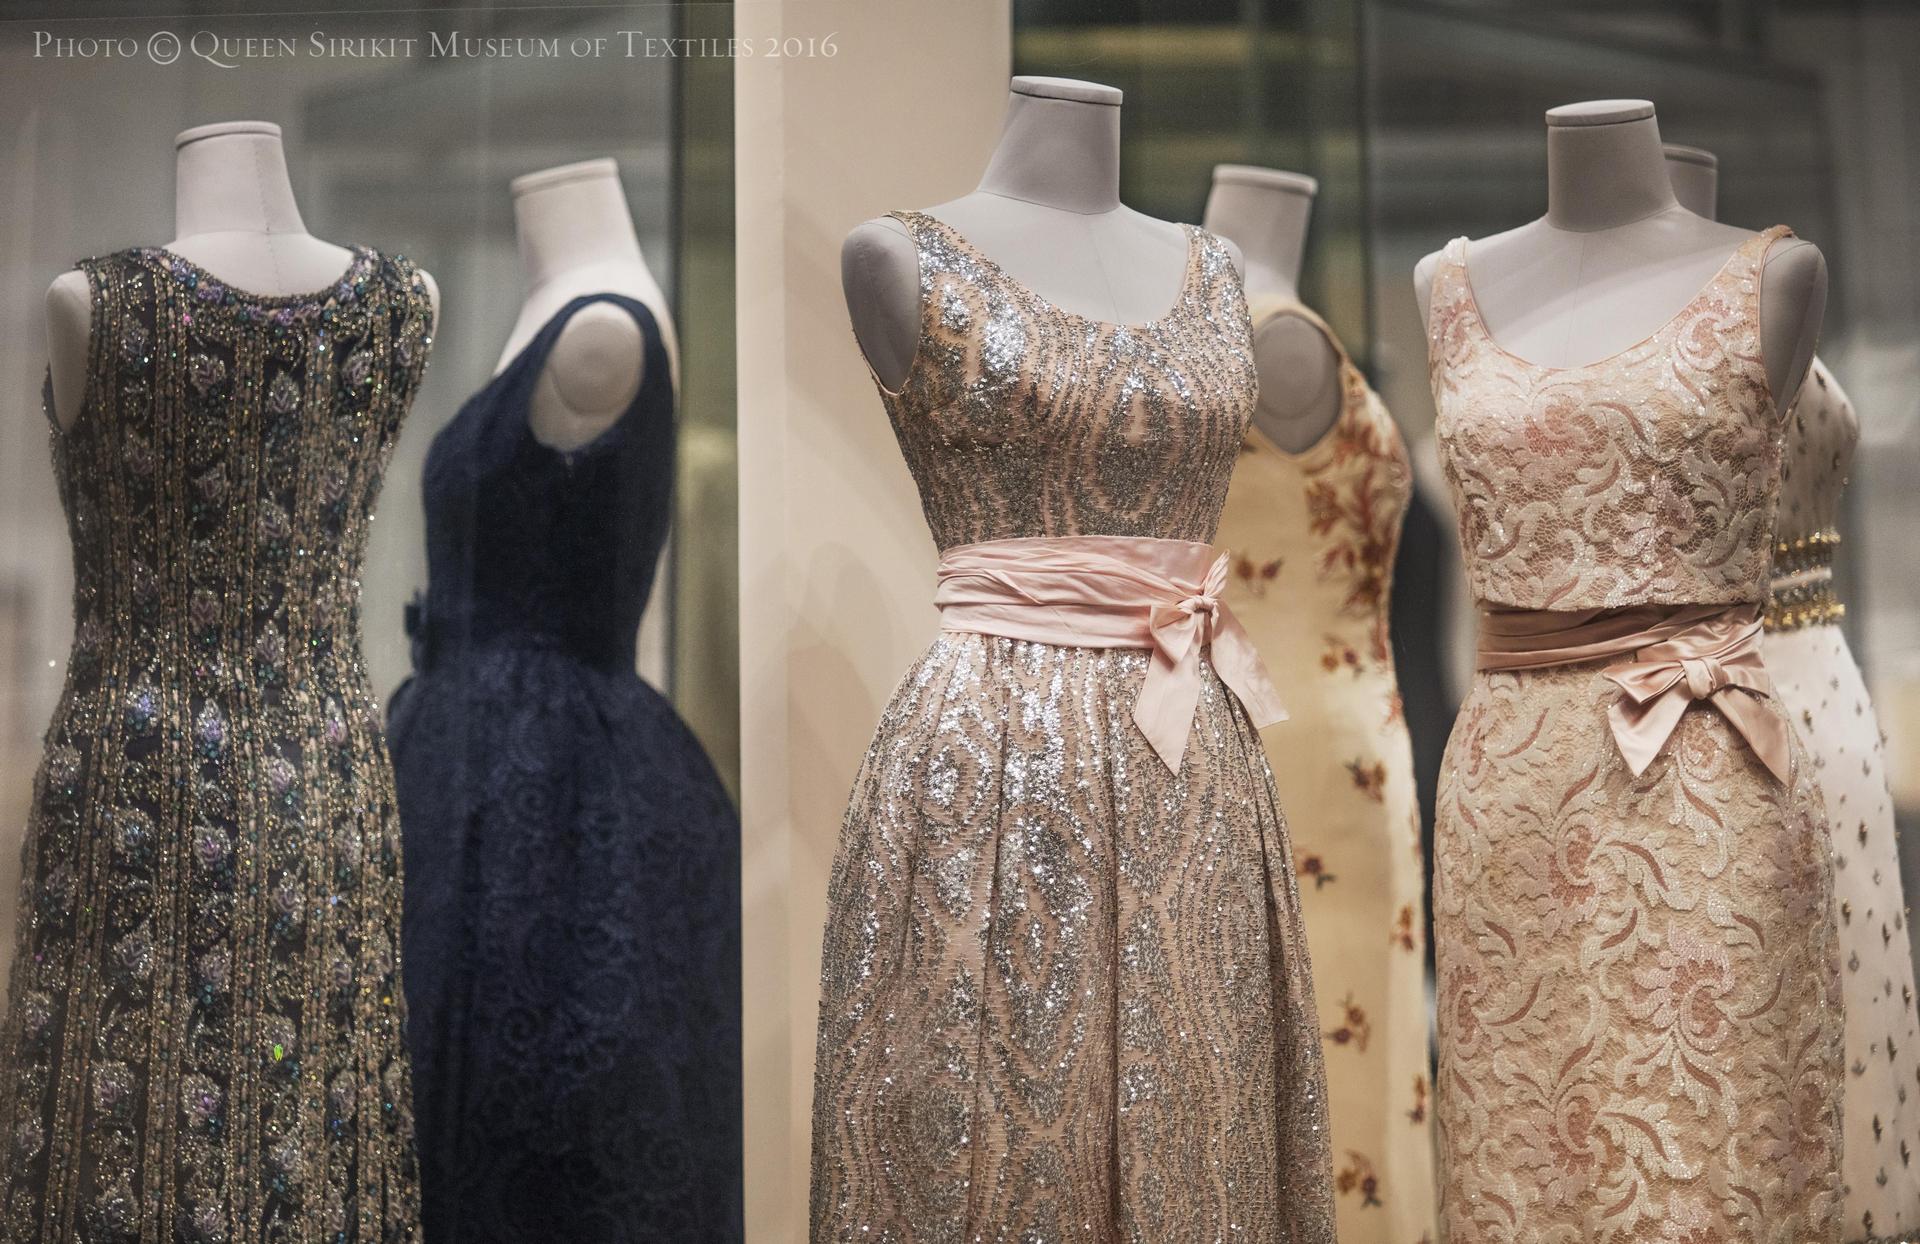 Photo: Queen Sirikit Museum of Textile